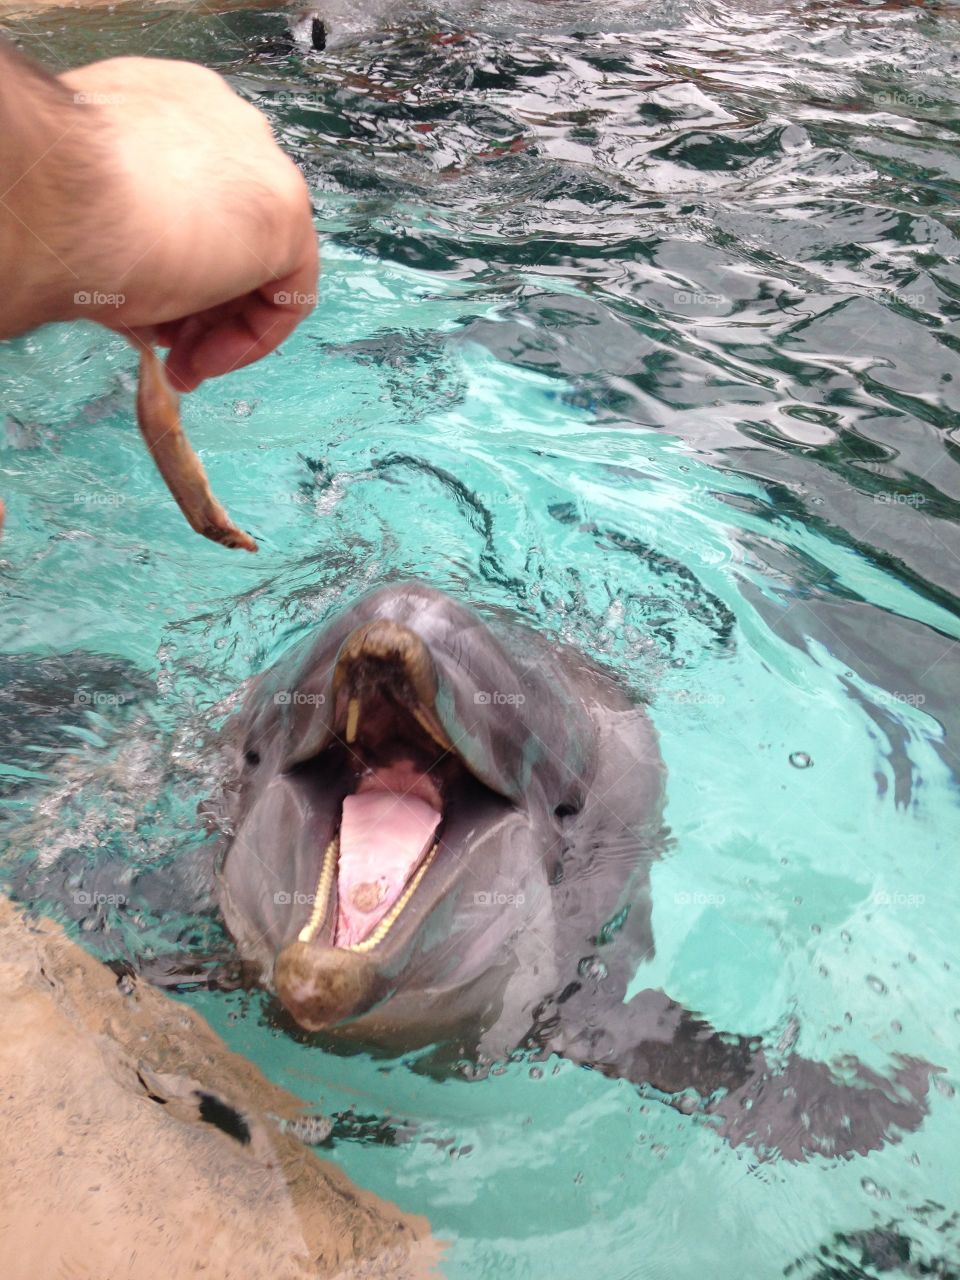 Feeding dolphins at Sea World